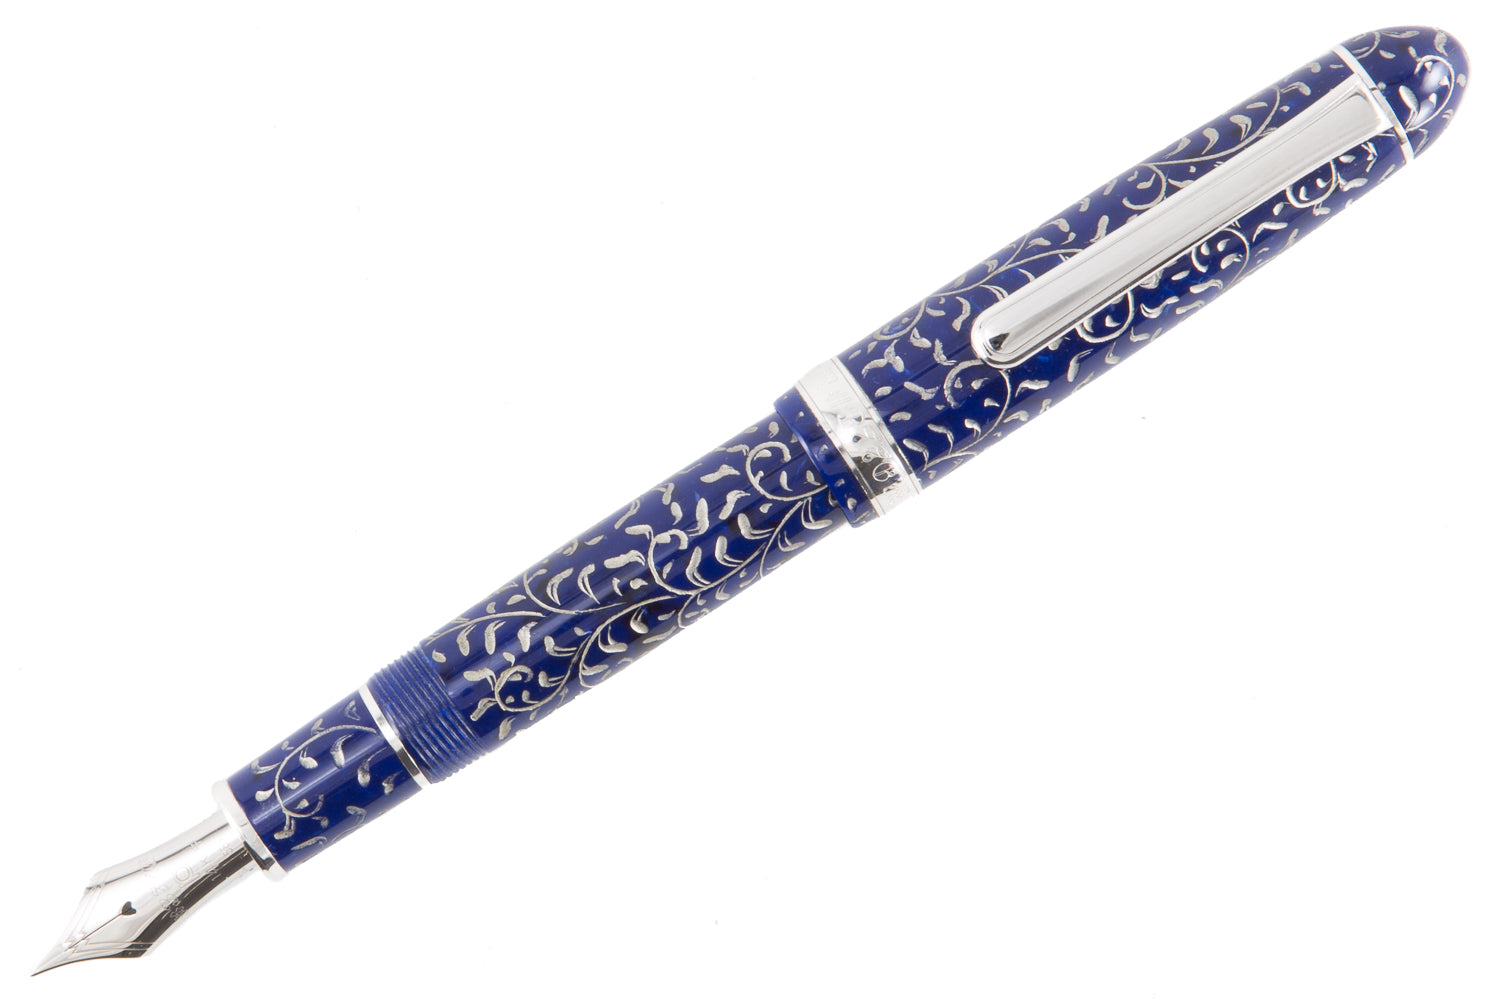 Platinum #3776 Celluloid Fountain Pen - Karakusa - The Goulet Pen 